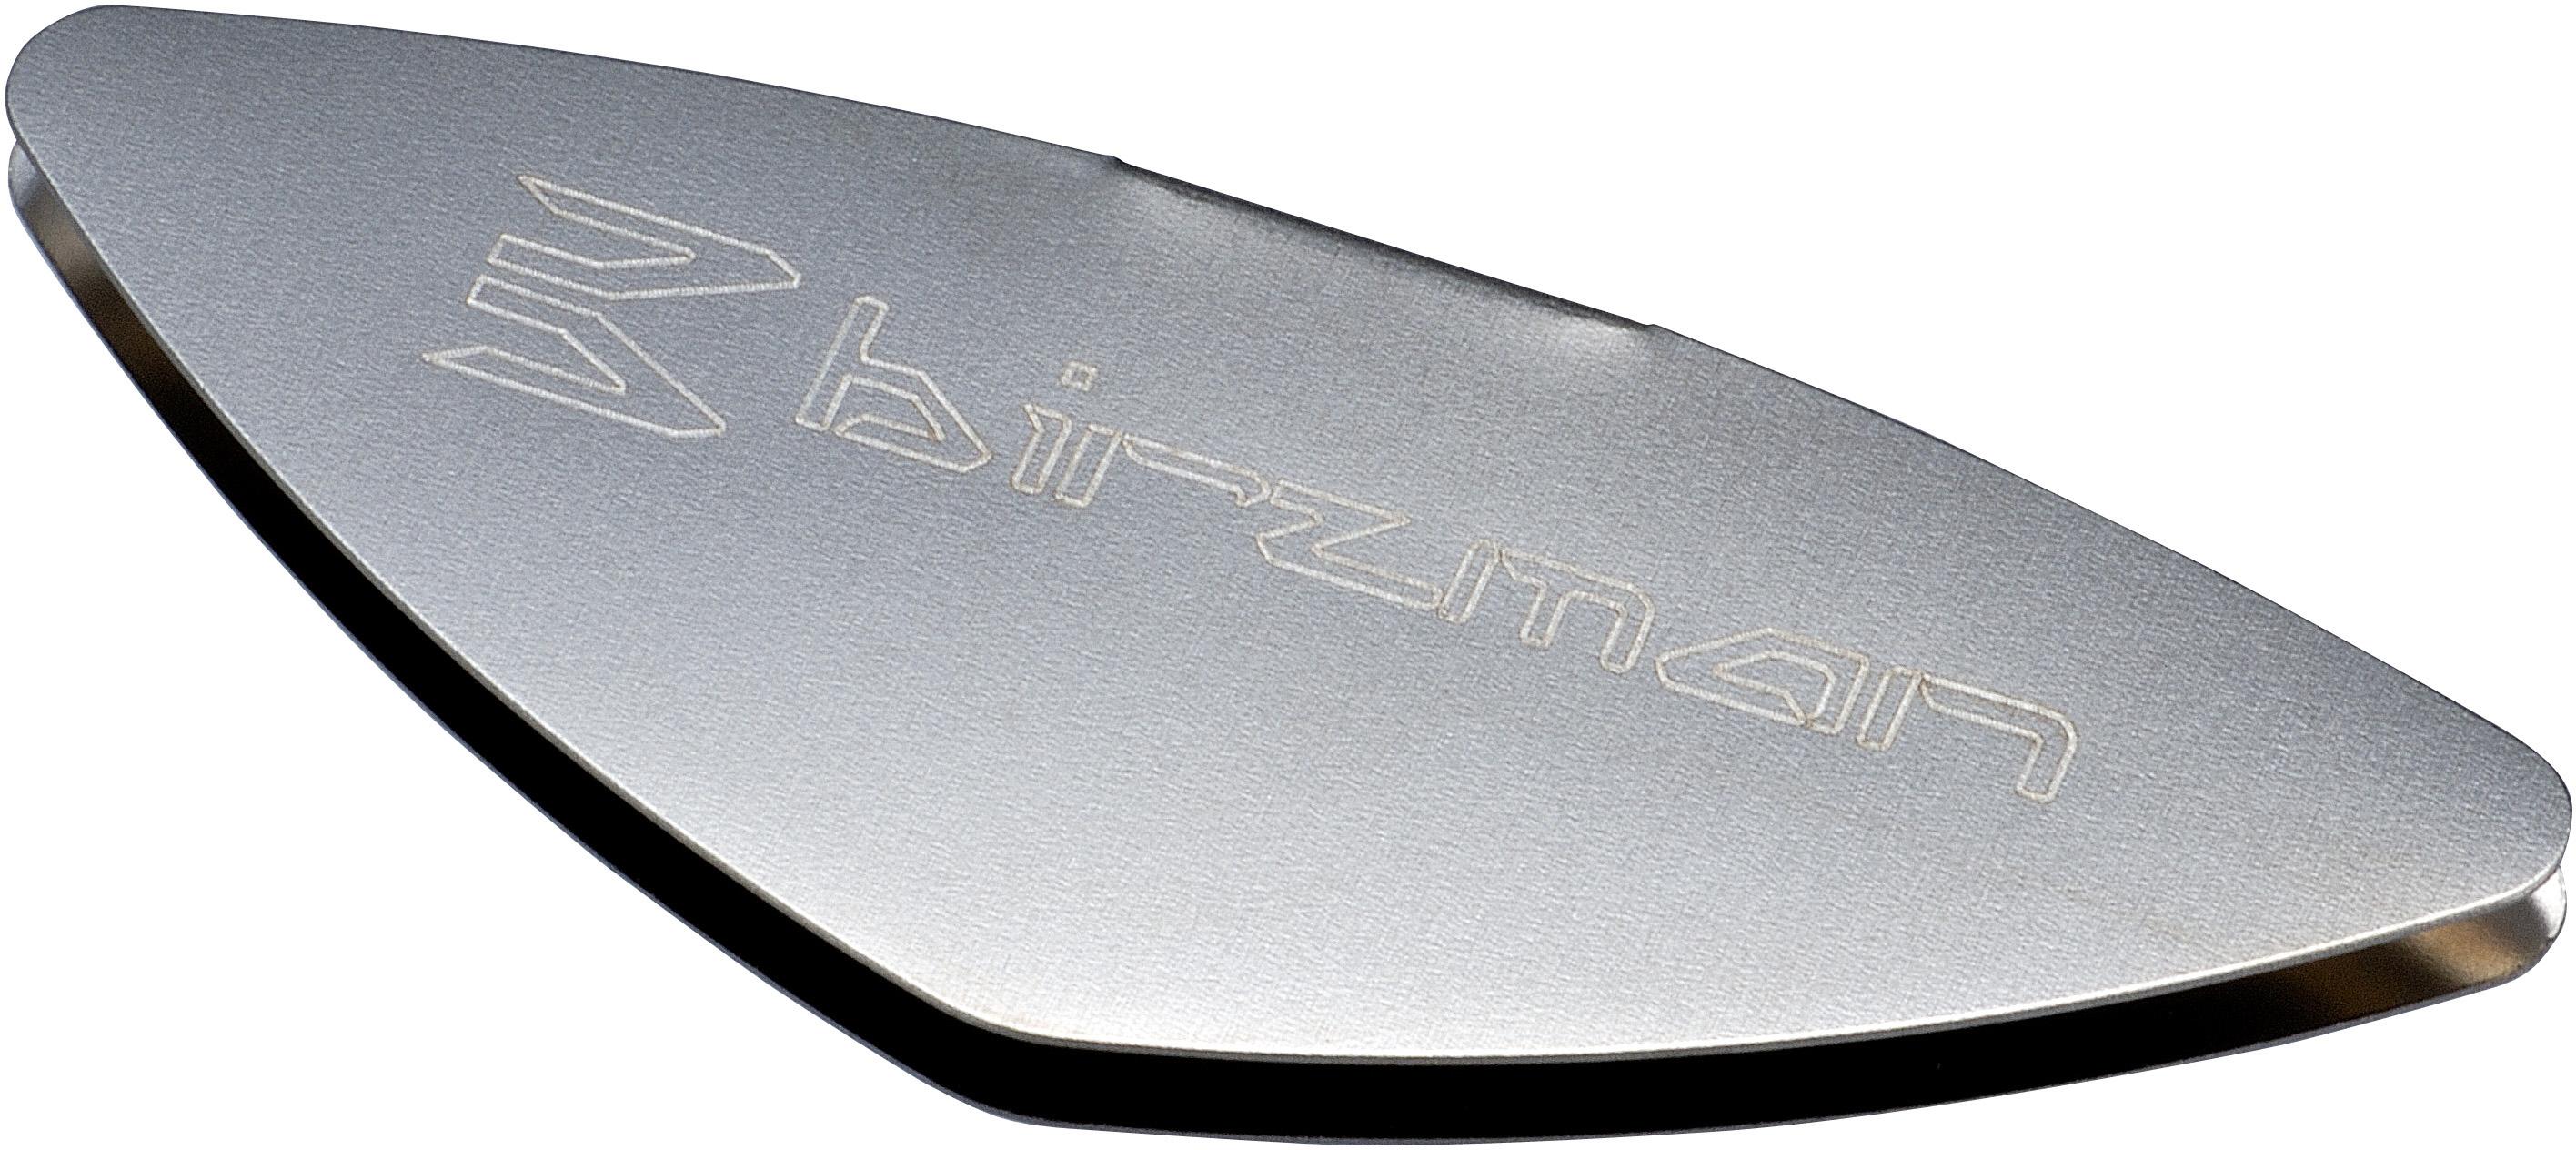 Birzman Clam Disc Brake Gap Indicator - Silver